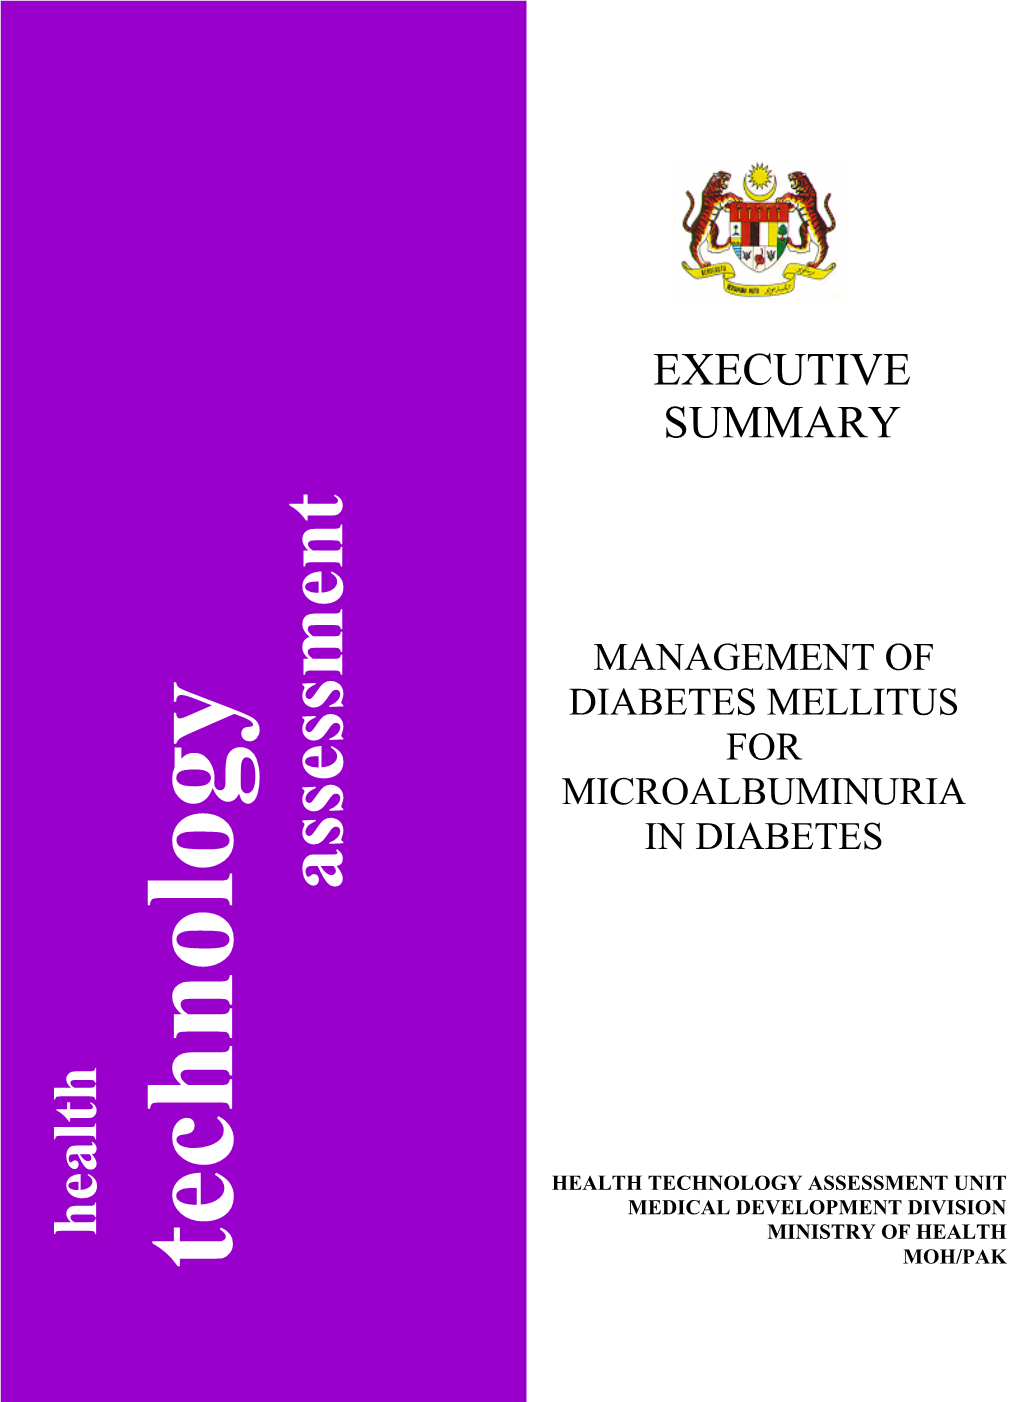 EXECECUTIVE SUMMARY Management of Diabetes Mellitus